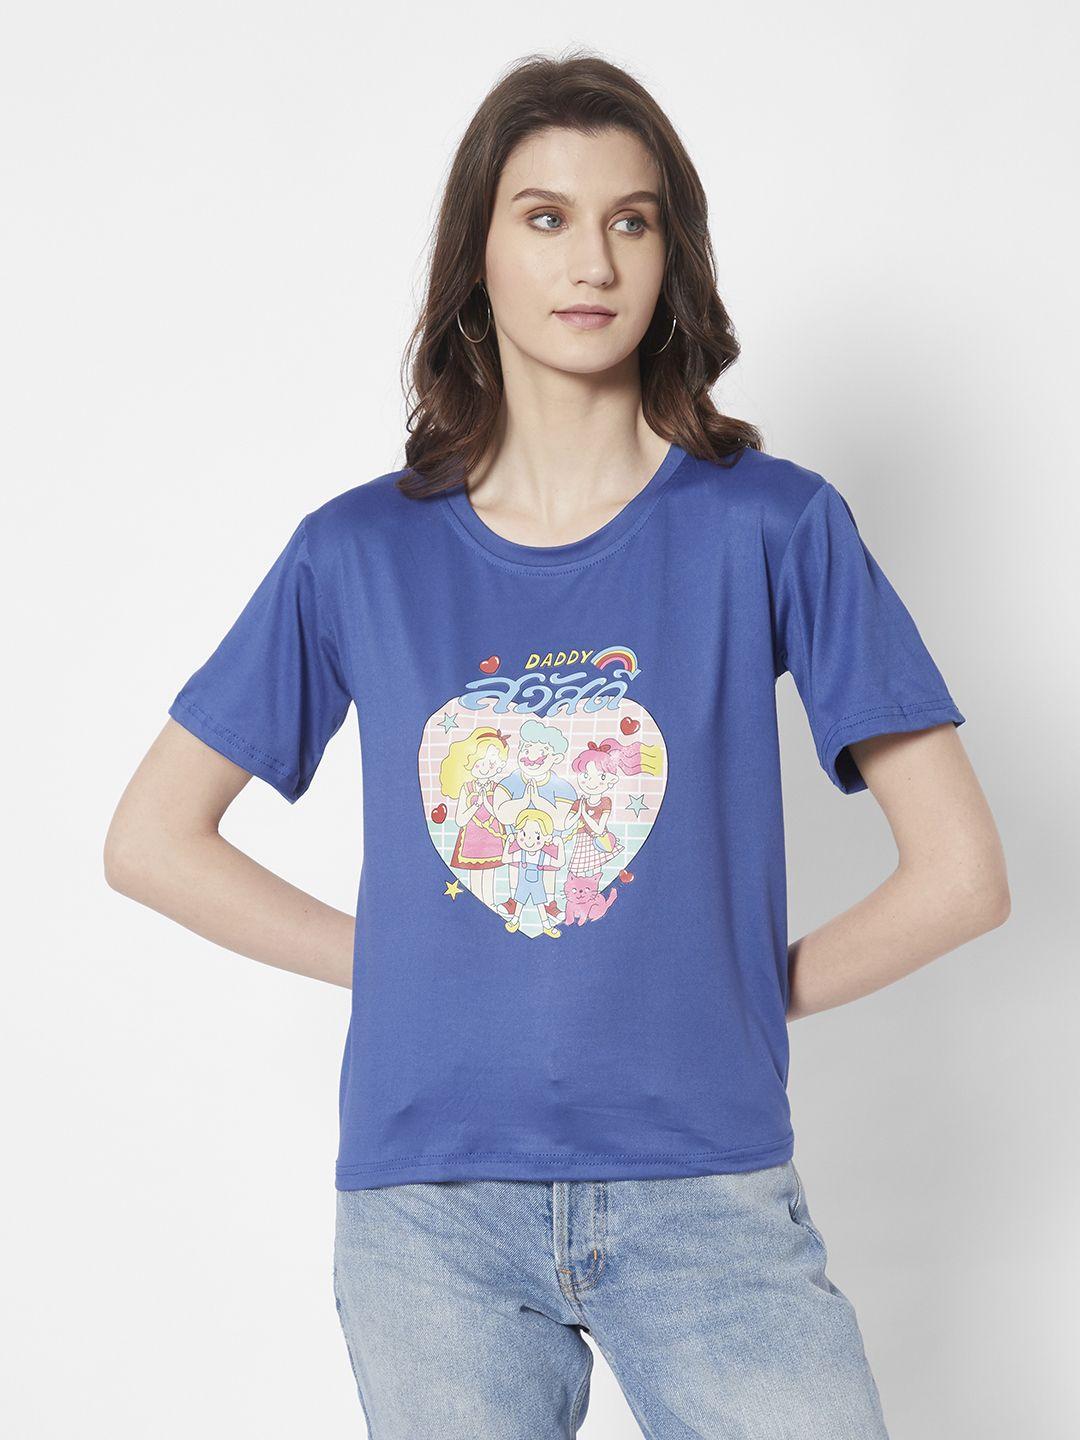 urbanic women blue printed t-shirt